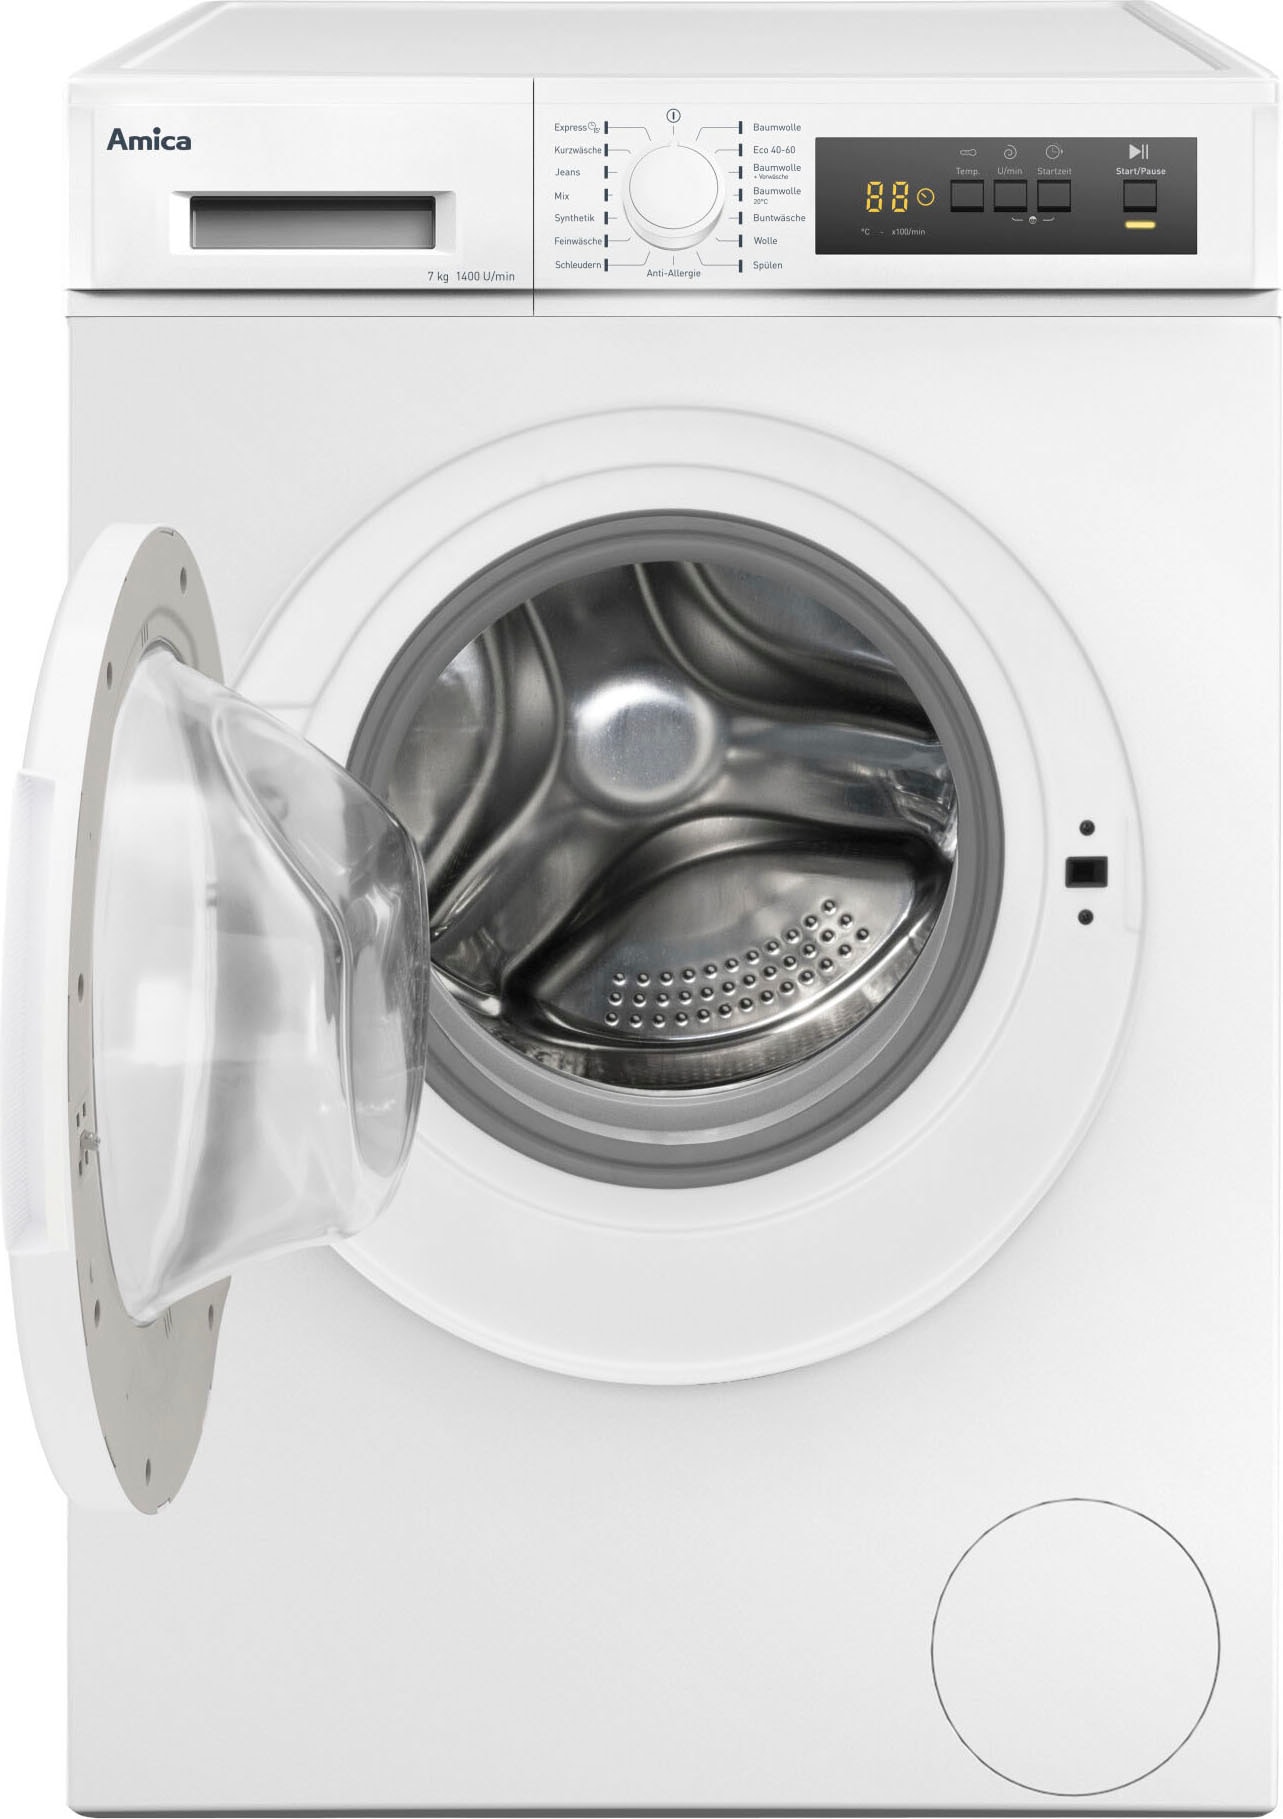 Amica Waschmaschine 474 U/min »WA 1400 bei WA 7 021«, 474 021, kg, online